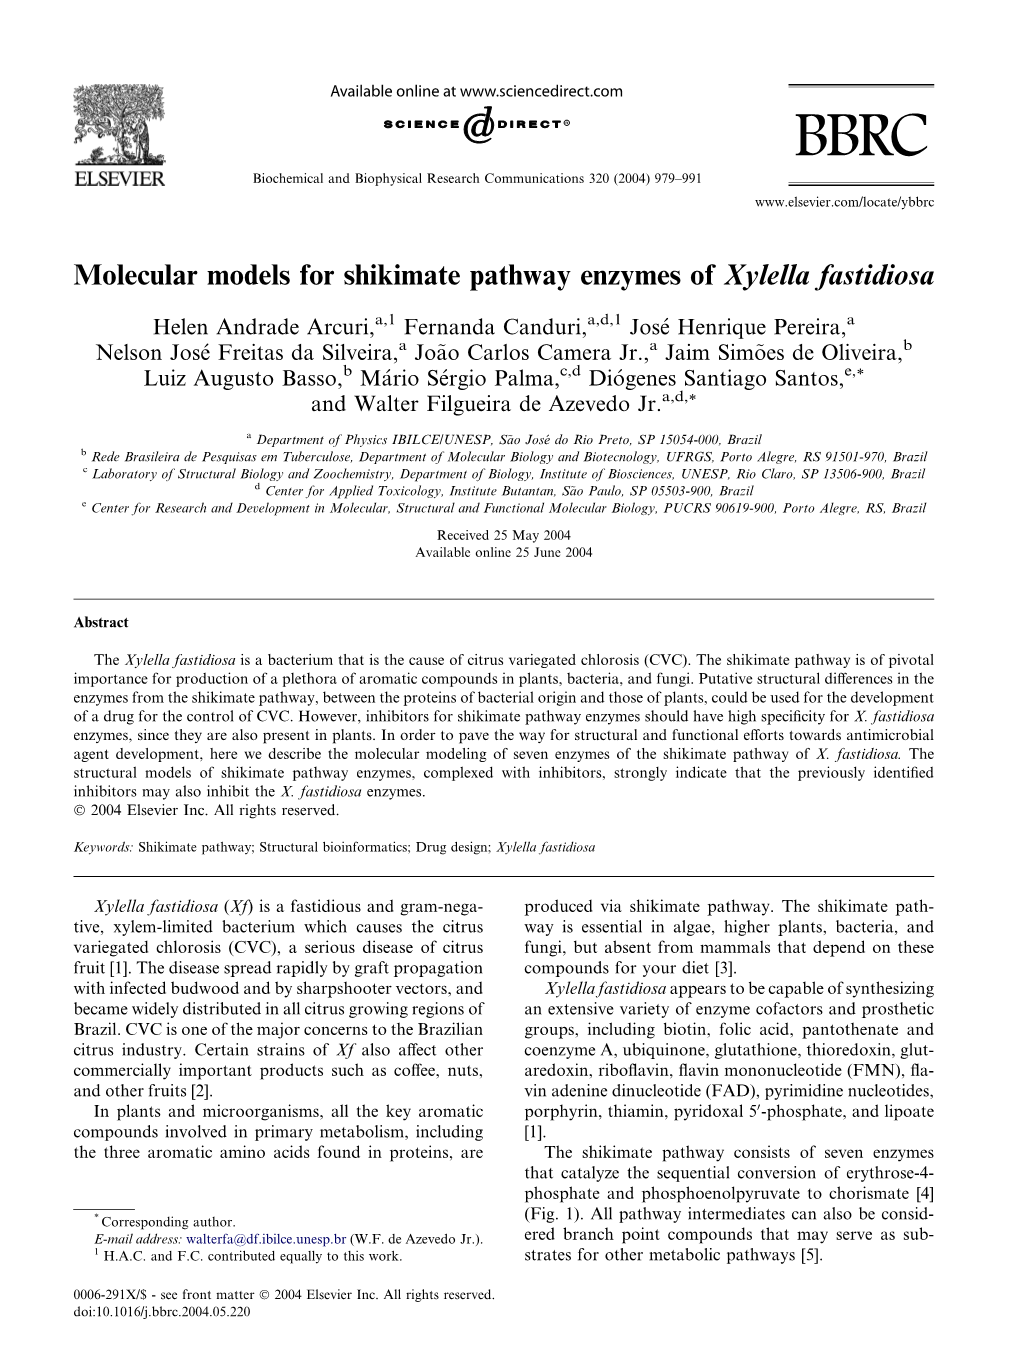 Molecular Models for Shikimate Pathway Enzymes of Xylella Fastidiosa